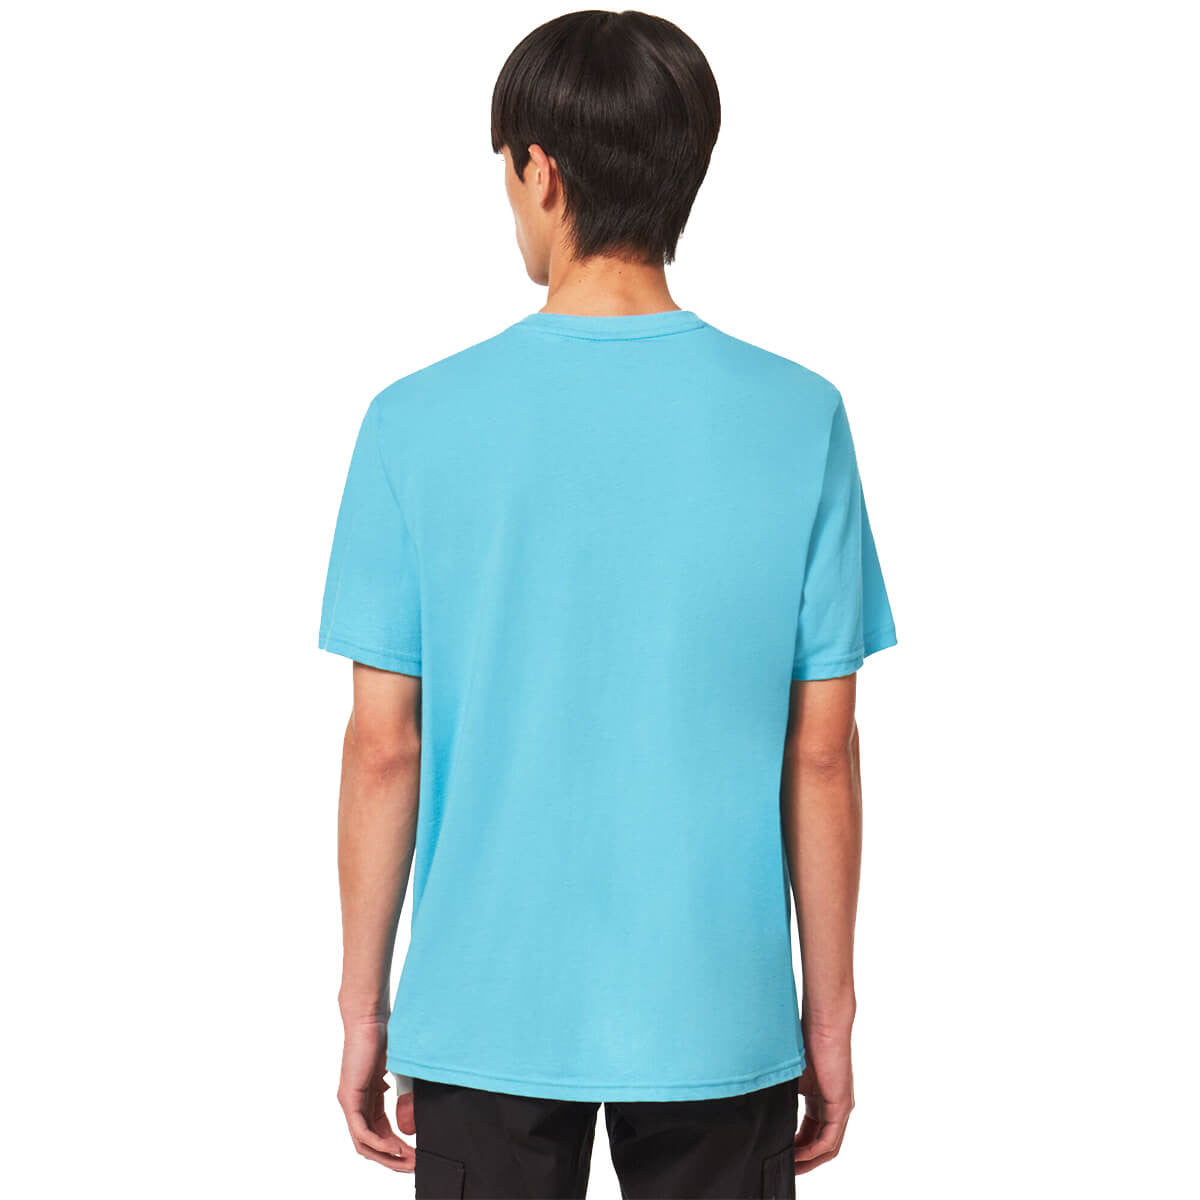 Mark II T-Shirt (Bright Blue)